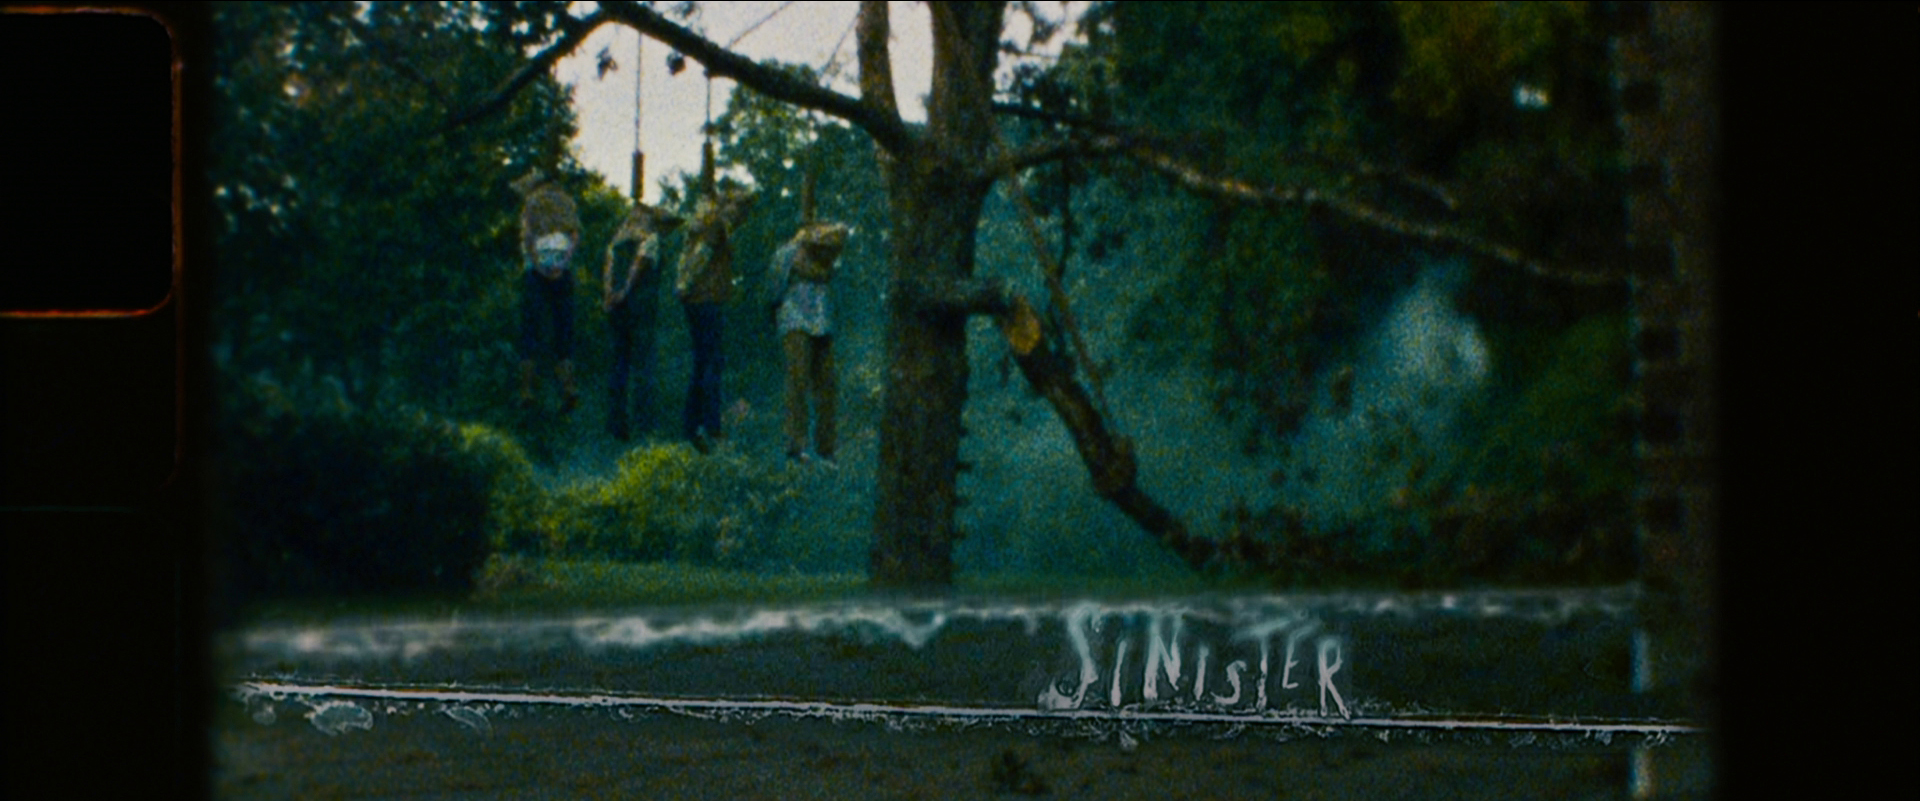 Sinister image film